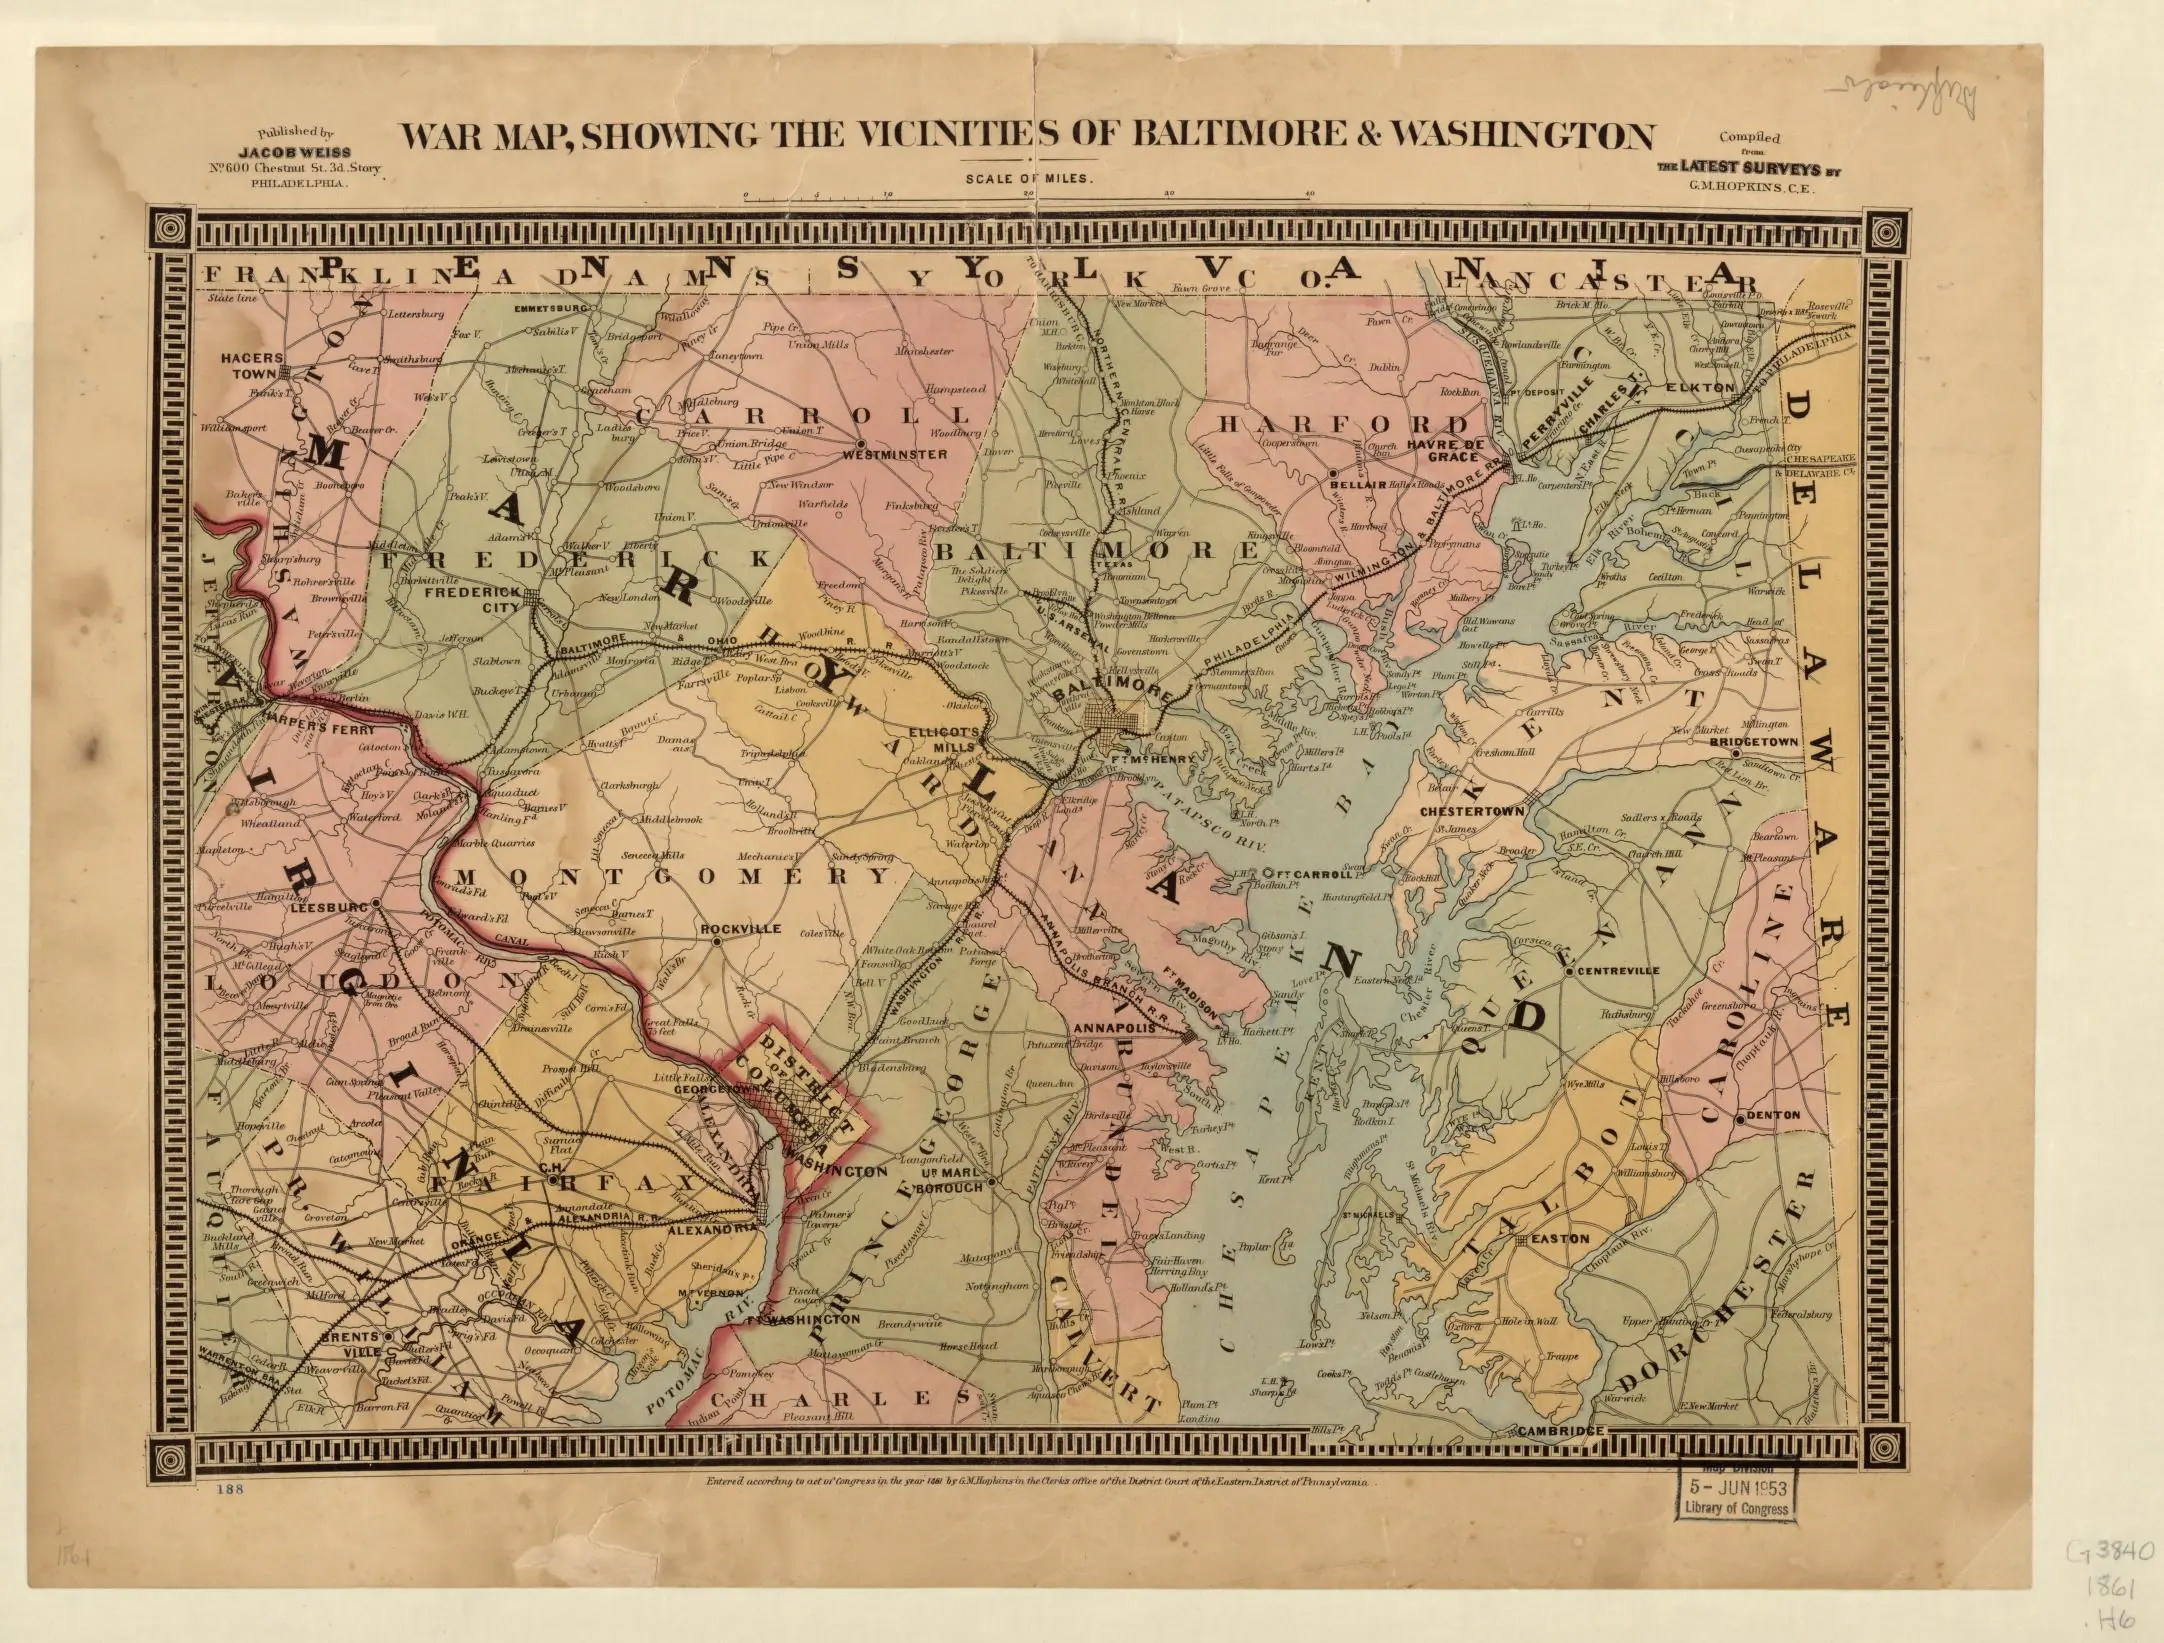 War map showing Washington DC